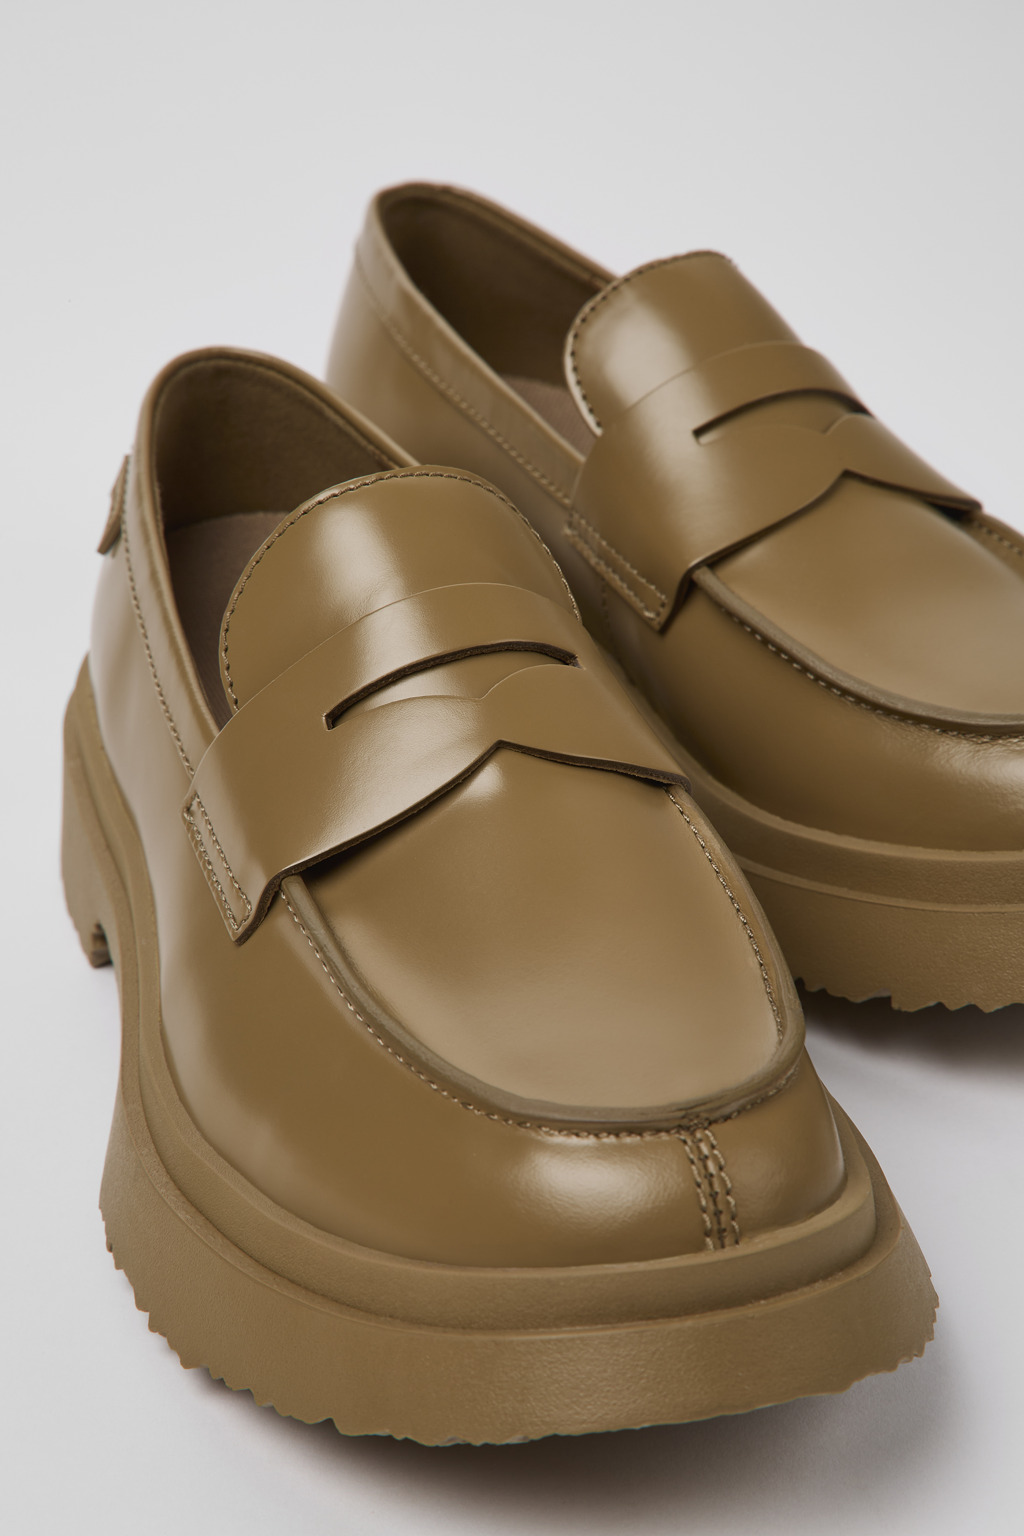 Walden Brown Formal Shoes for Women - Camper Shoes